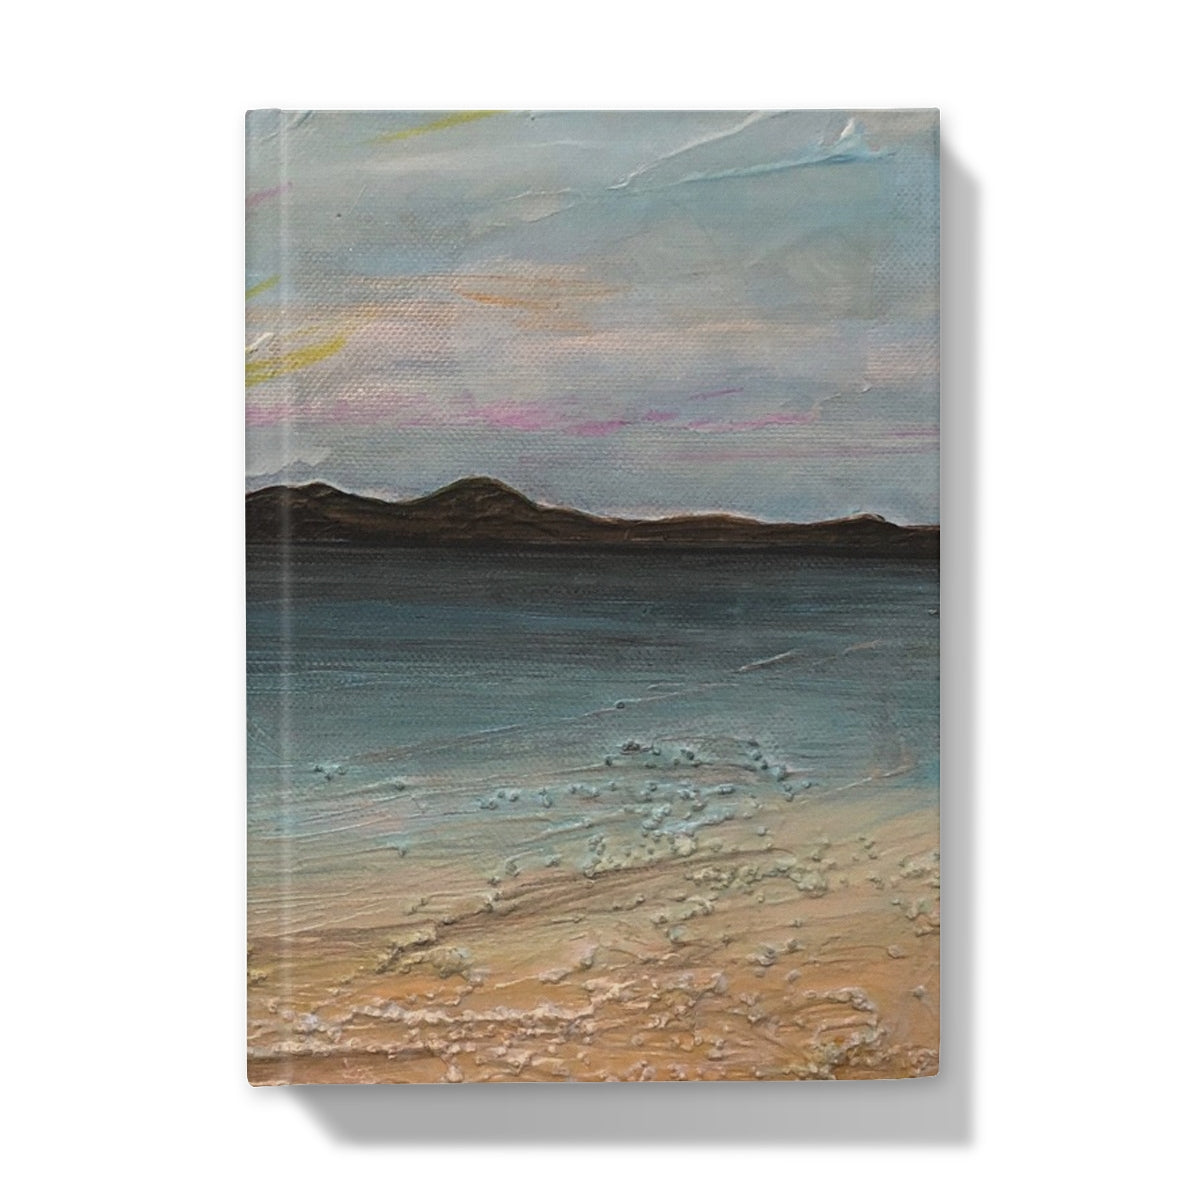 Garrynamonie Beach South Uist Art Gifts Hardback Journal-Journals & Notebooks-Hebridean Islands Art Gallery-5"x7"-Plain-Paintings, Prints, Homeware, Art Gifts From Scotland By Scottish Artist Kevin Hunter